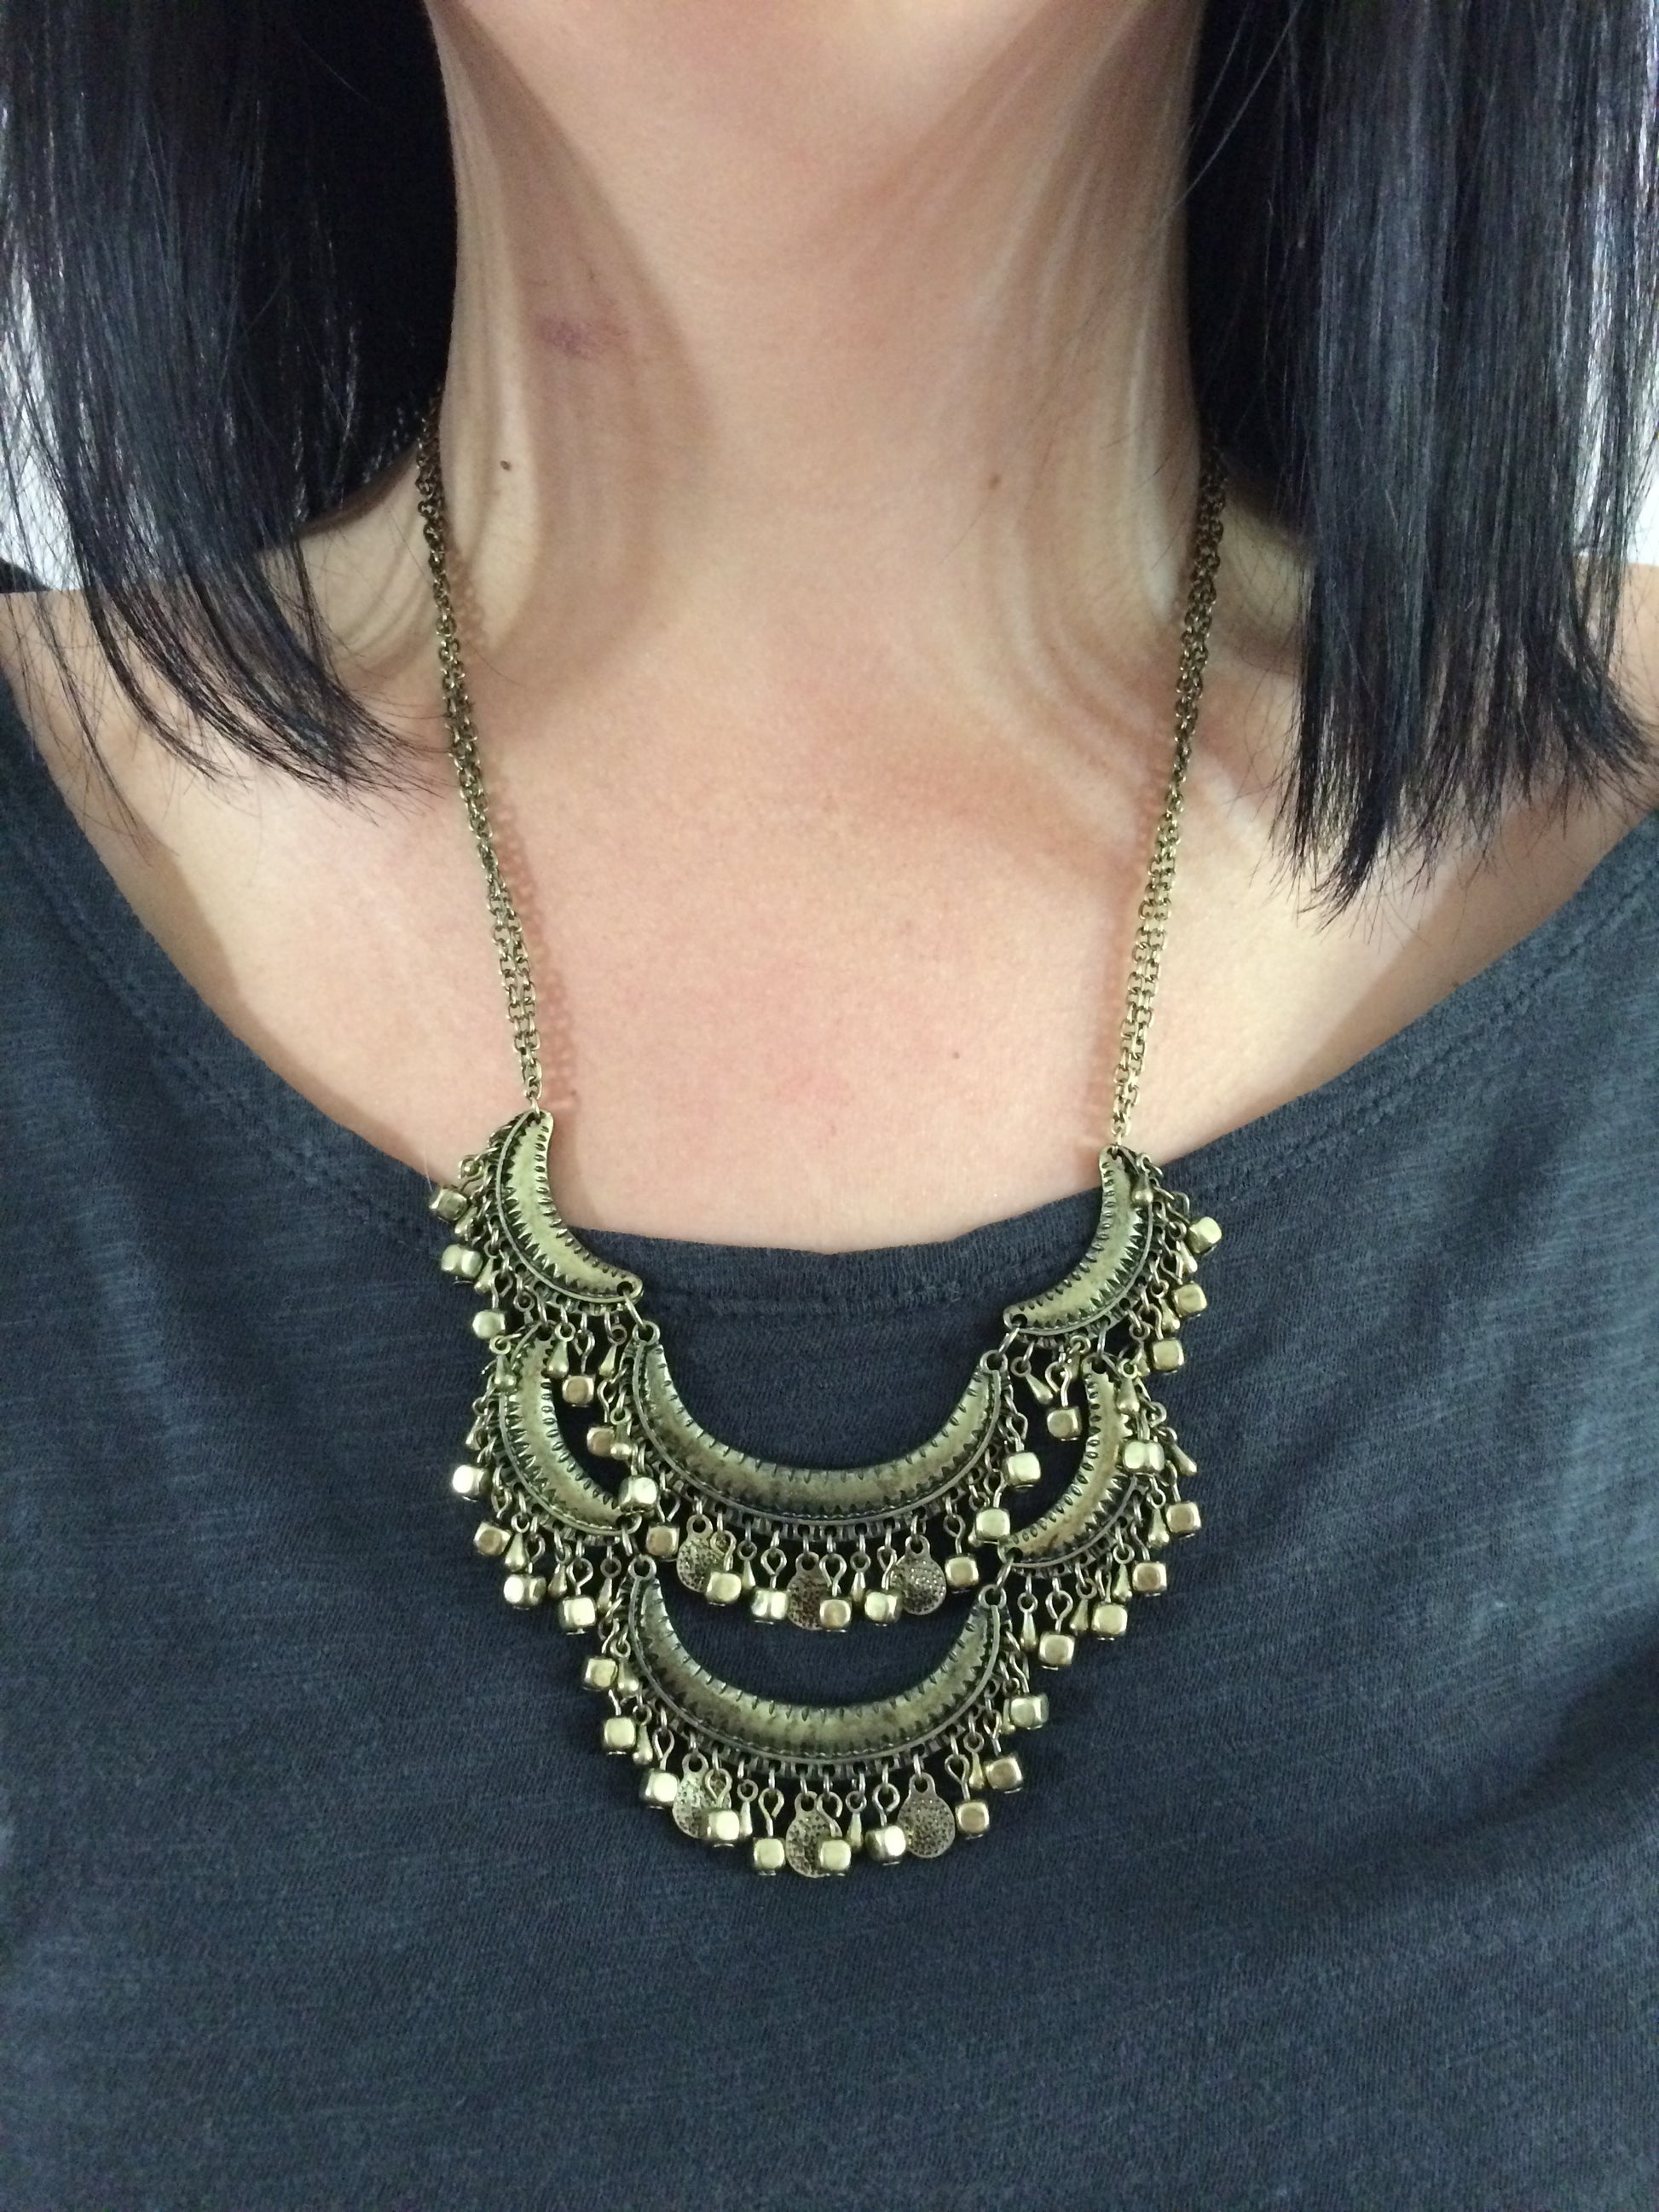 Jakarta Bronze Layer Necklace - Le Prix Fashion & Consulting